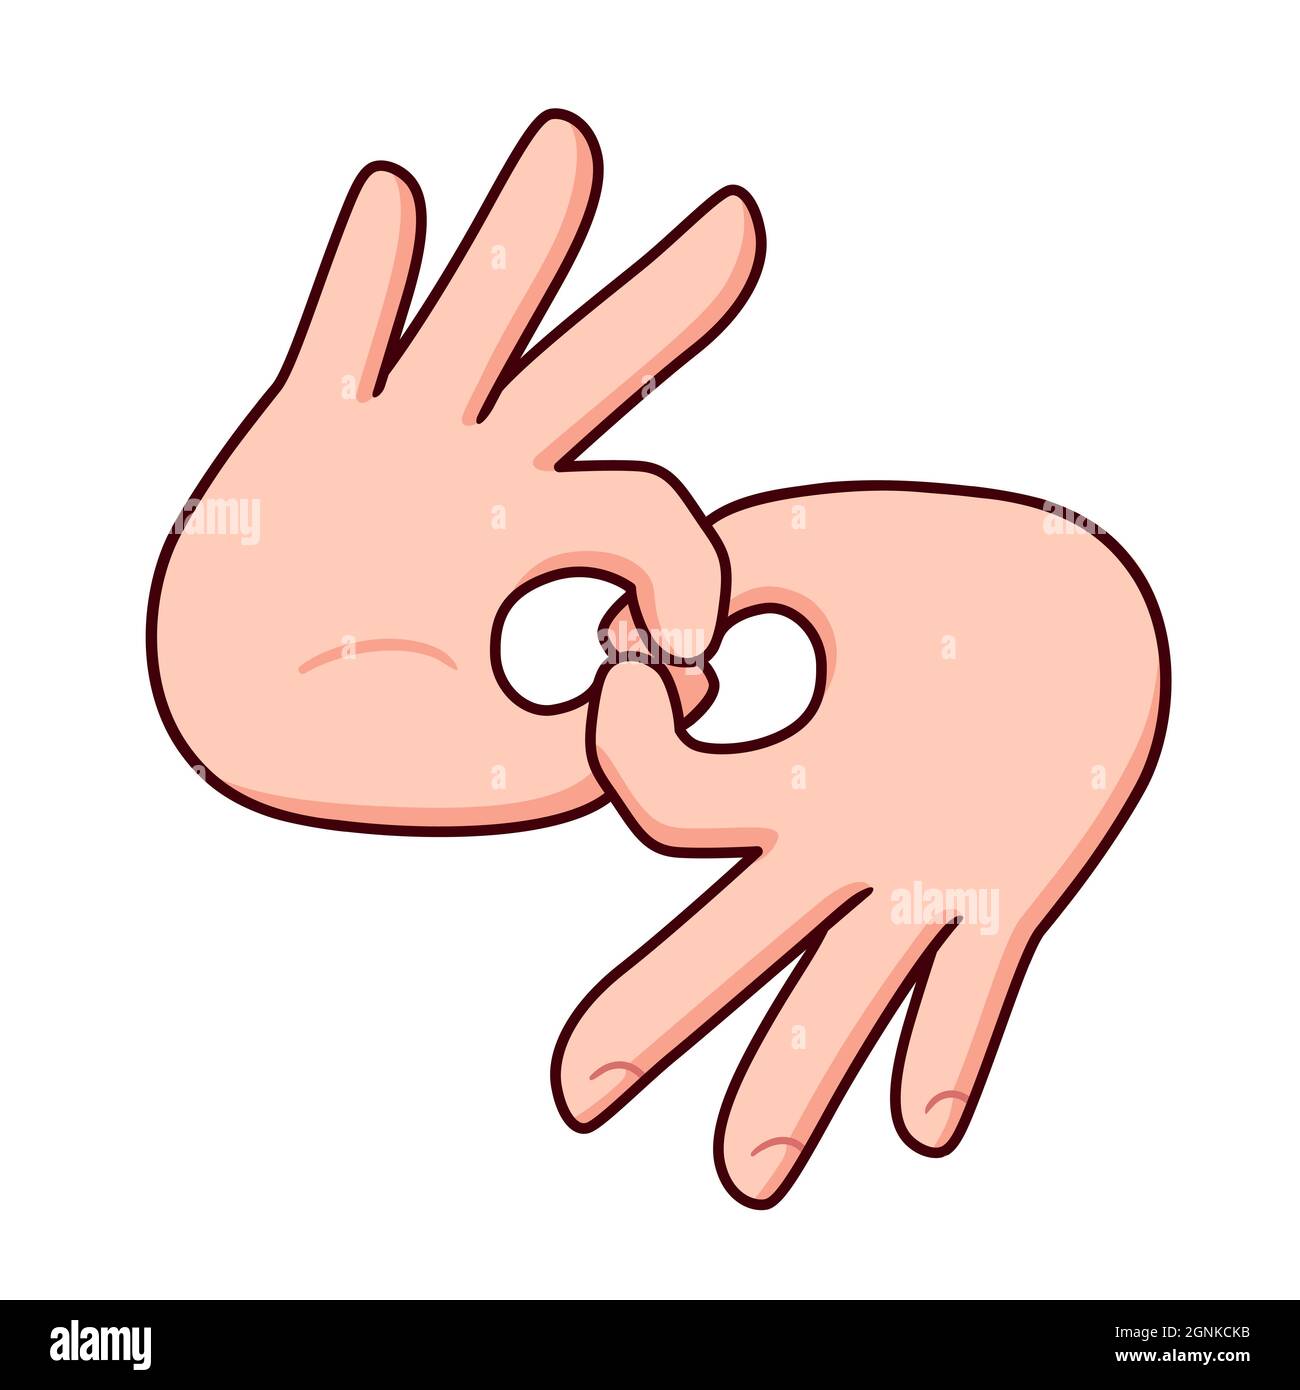 Cartoon hands making symbol 'Connect' in ASL. Sign Language gesture. Vector clip art illustration. Stock Vector